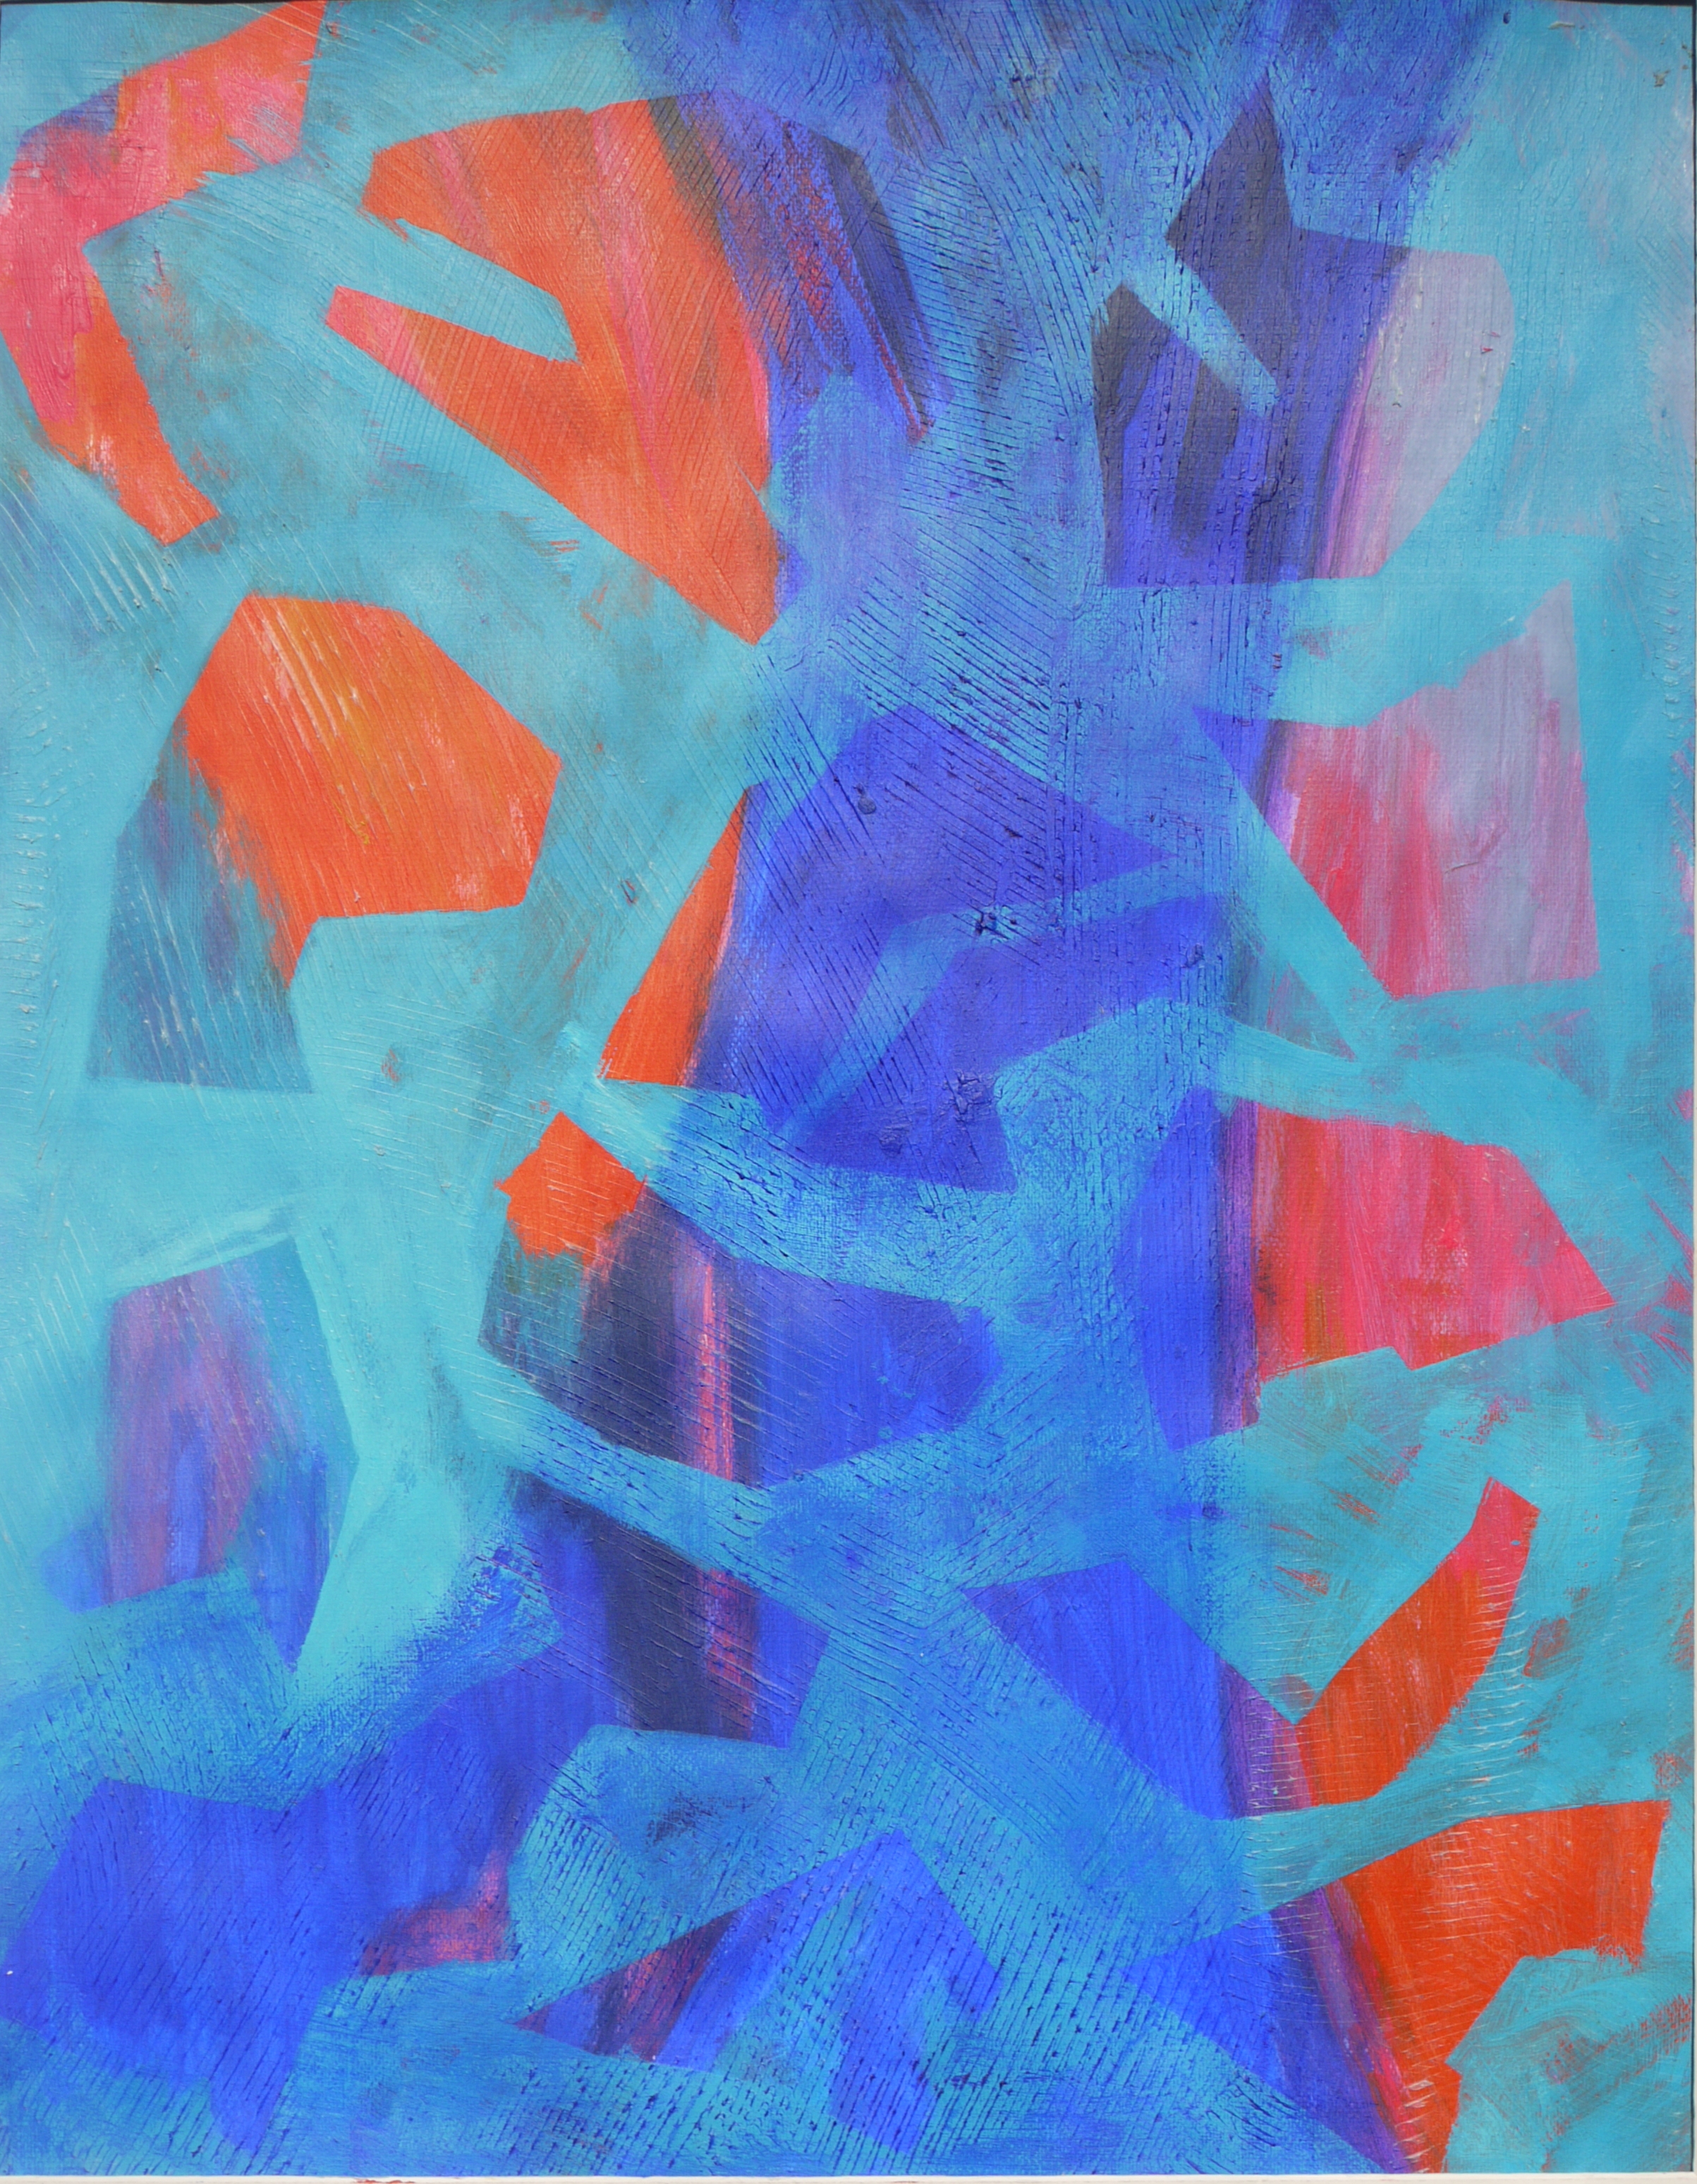 z.t., acryl op papier, 50 x 65 cm, 2012